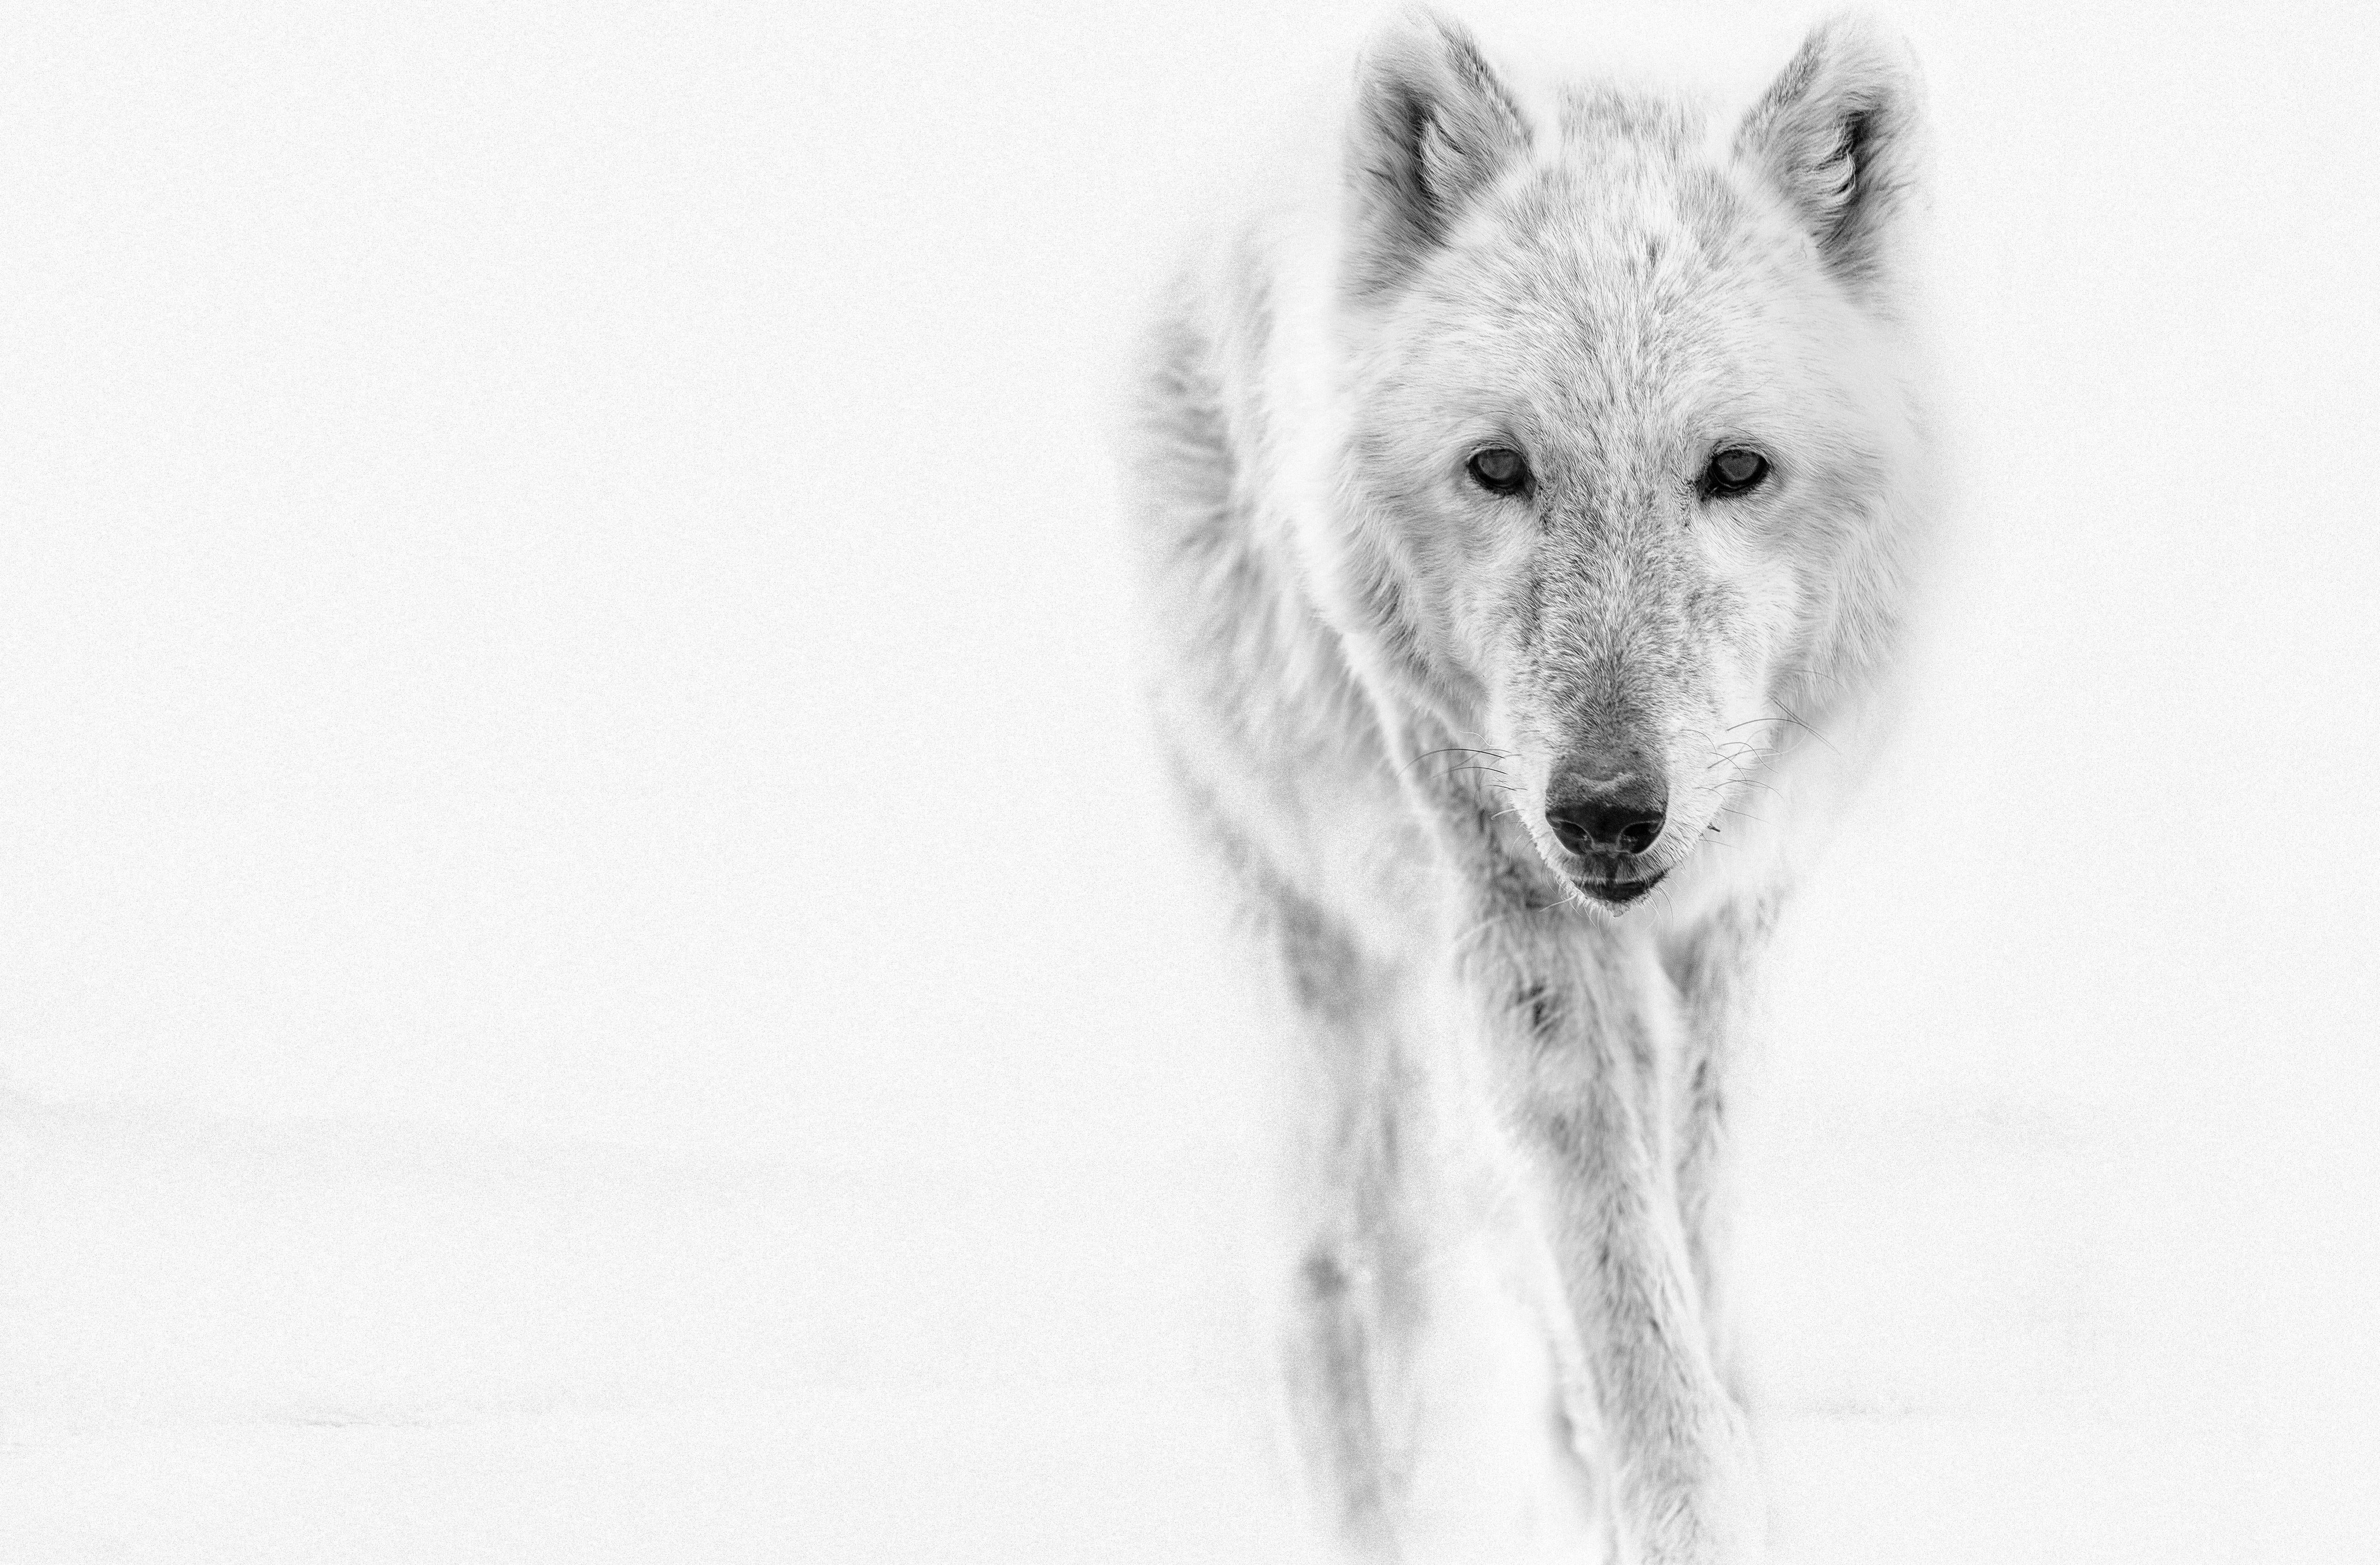 black wolf vs white wolf